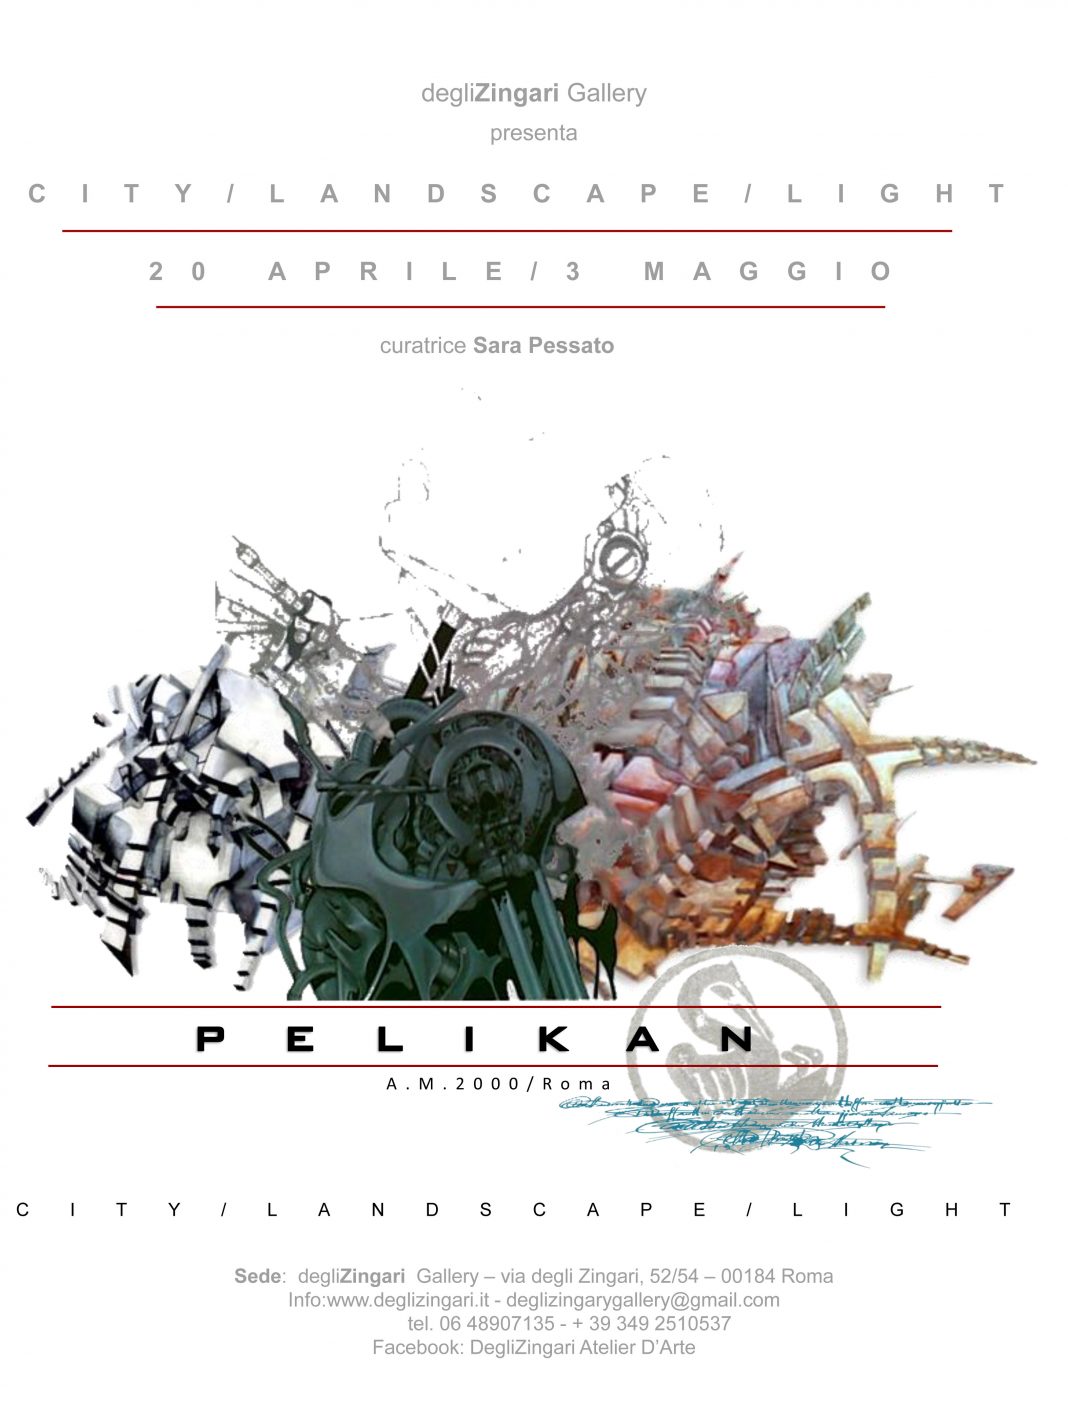 Pelikan – City / Landscape / Lighthttps://www.exibart.com/repository/media/eventi/2012/04/pelikan-8211-city-landscape-light-1068x1424.jpg